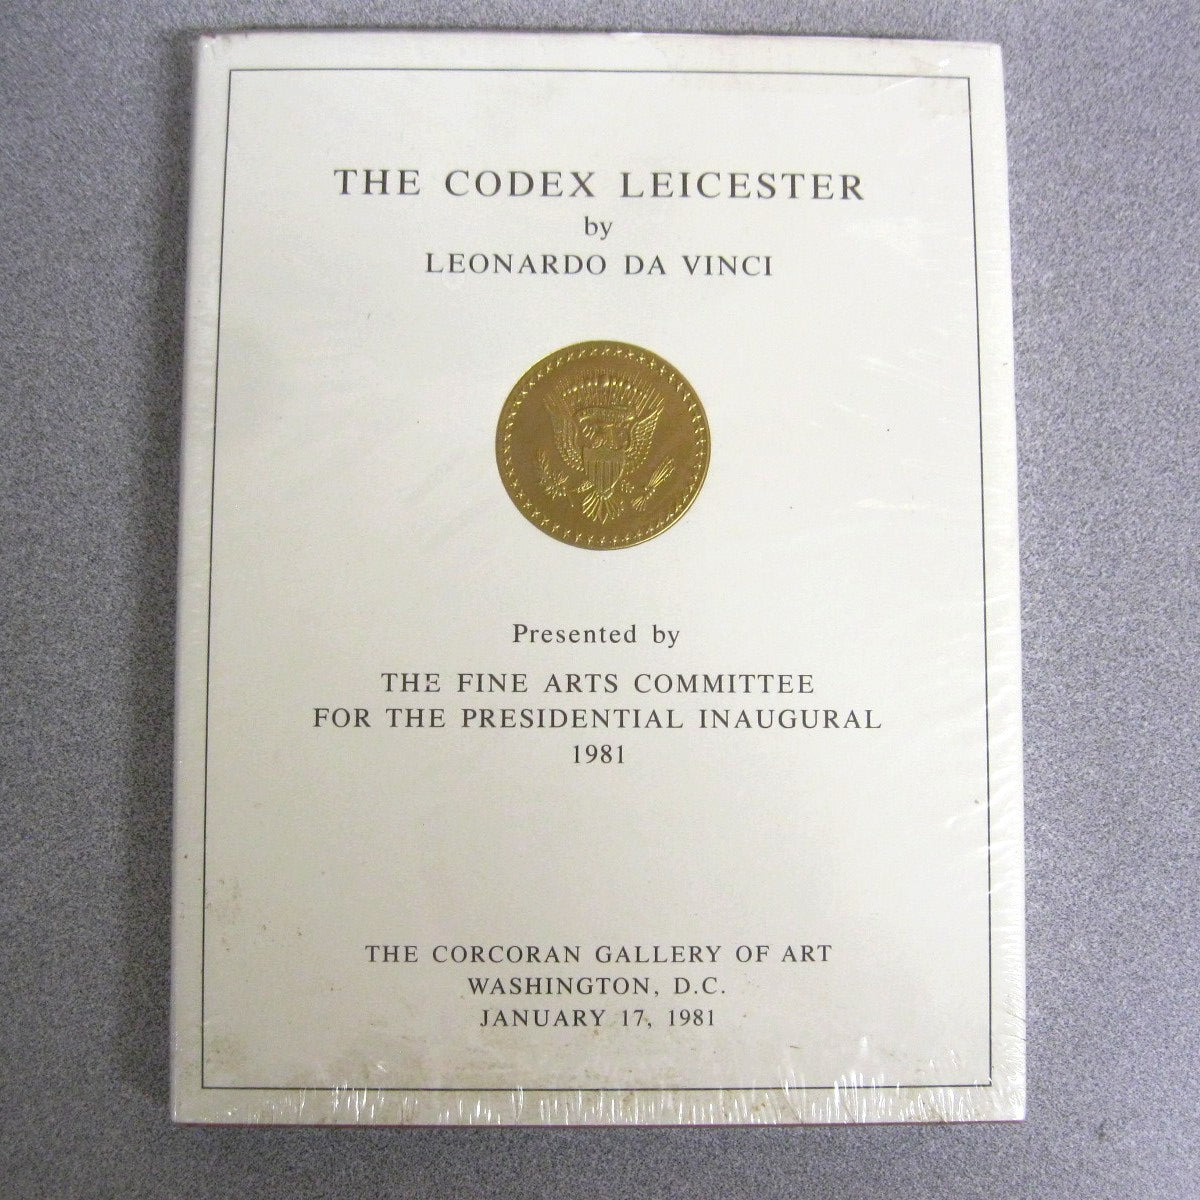 The Codex Leicester by Leonardo da Vinci